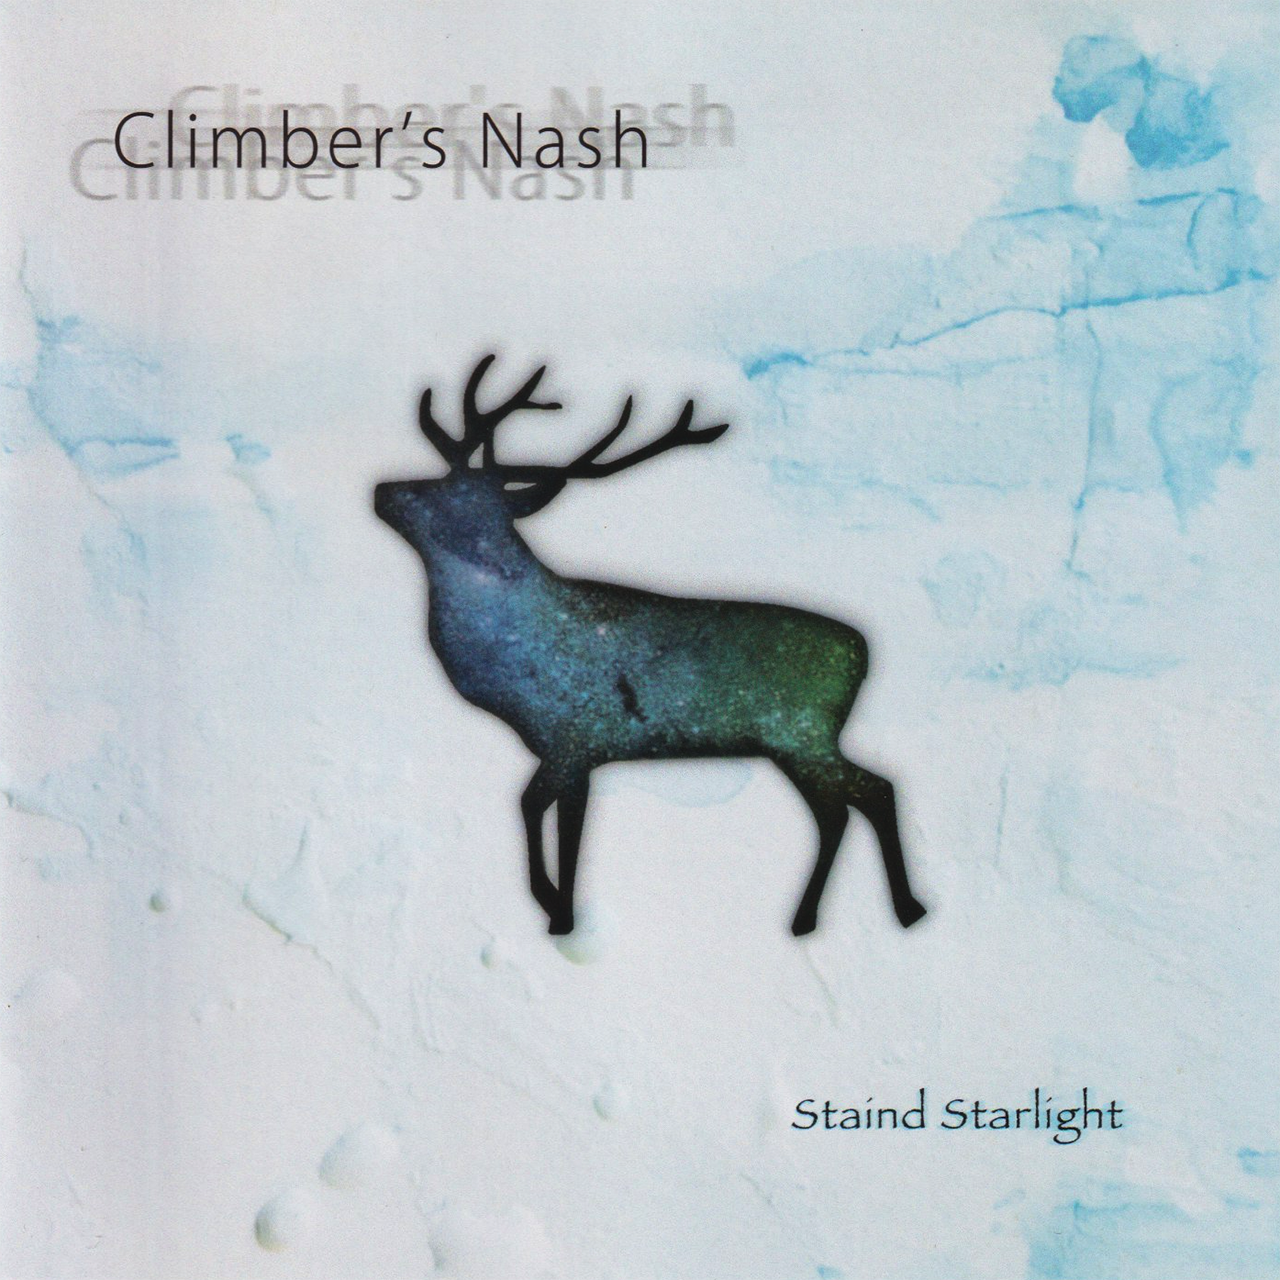 Staind Starlight / Climber's Nash